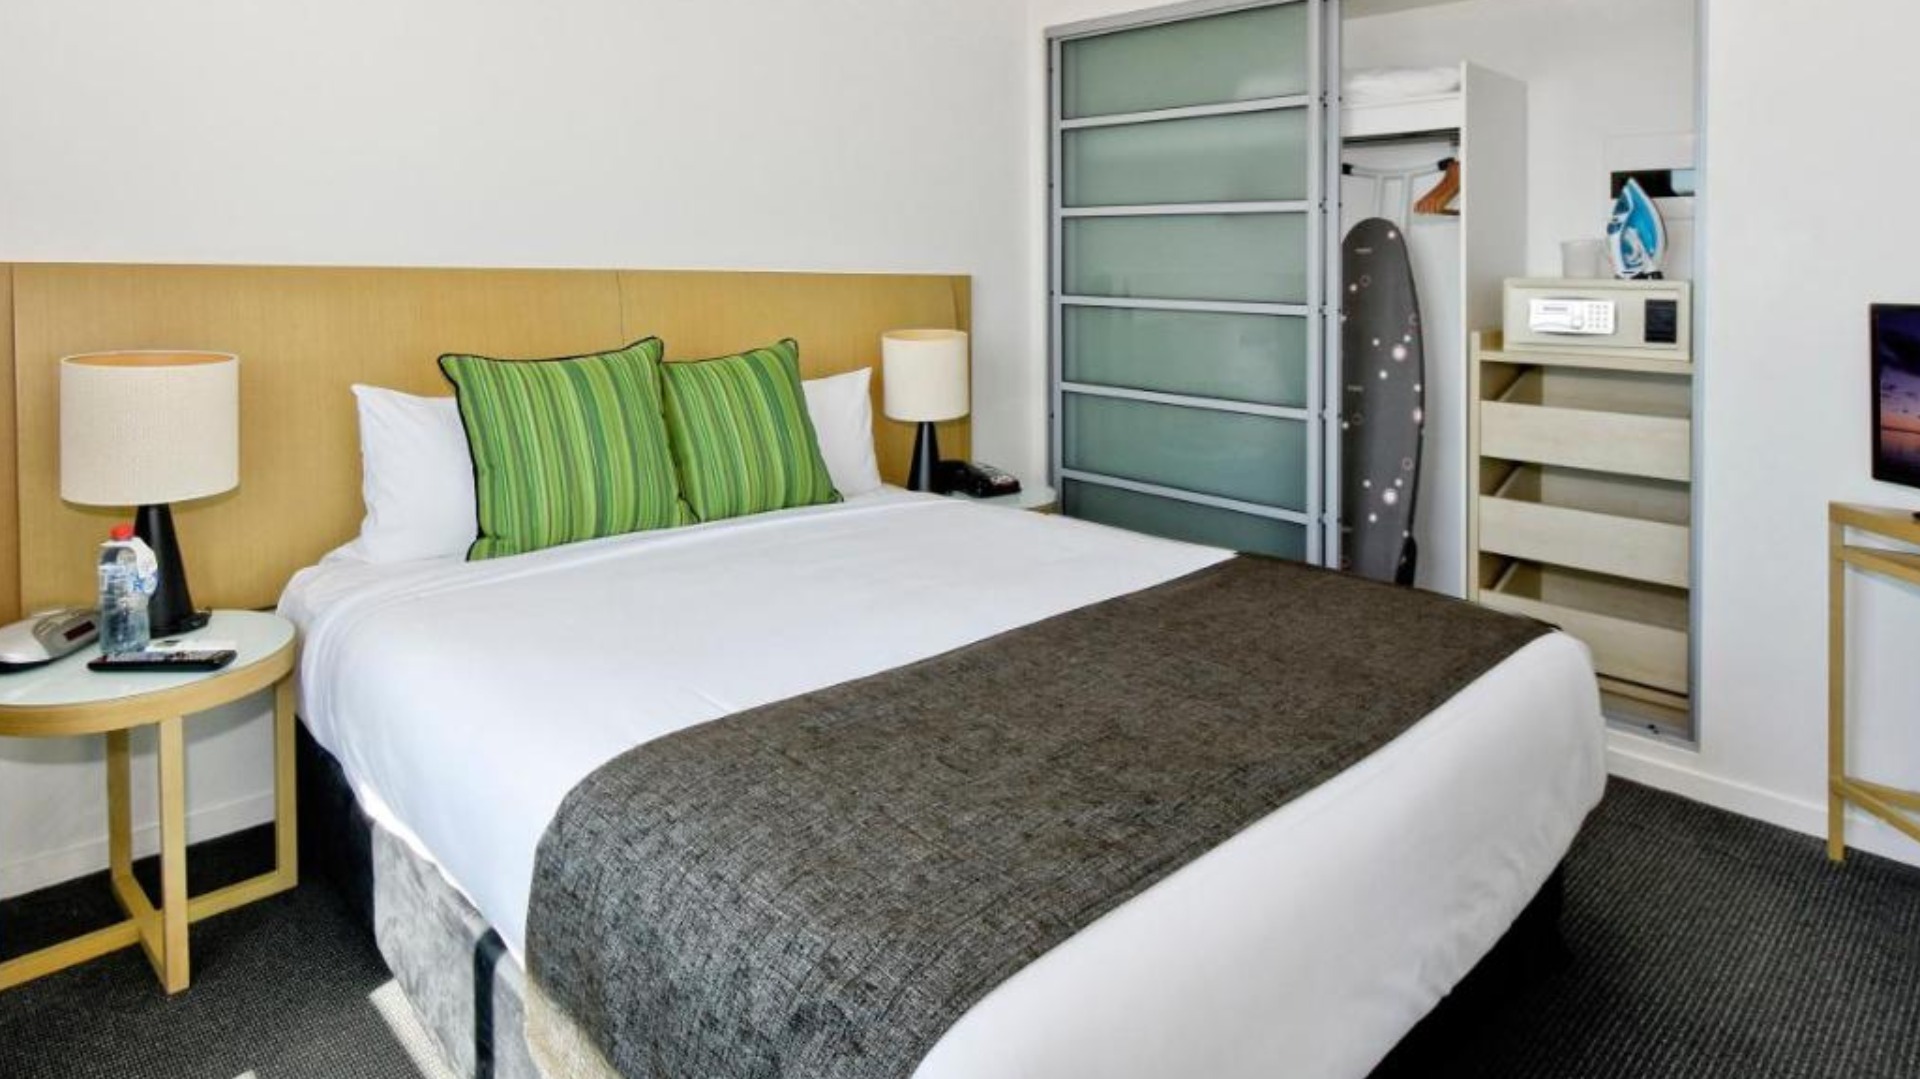 60 sqm One Bedroom at Darwin Harbour Suite